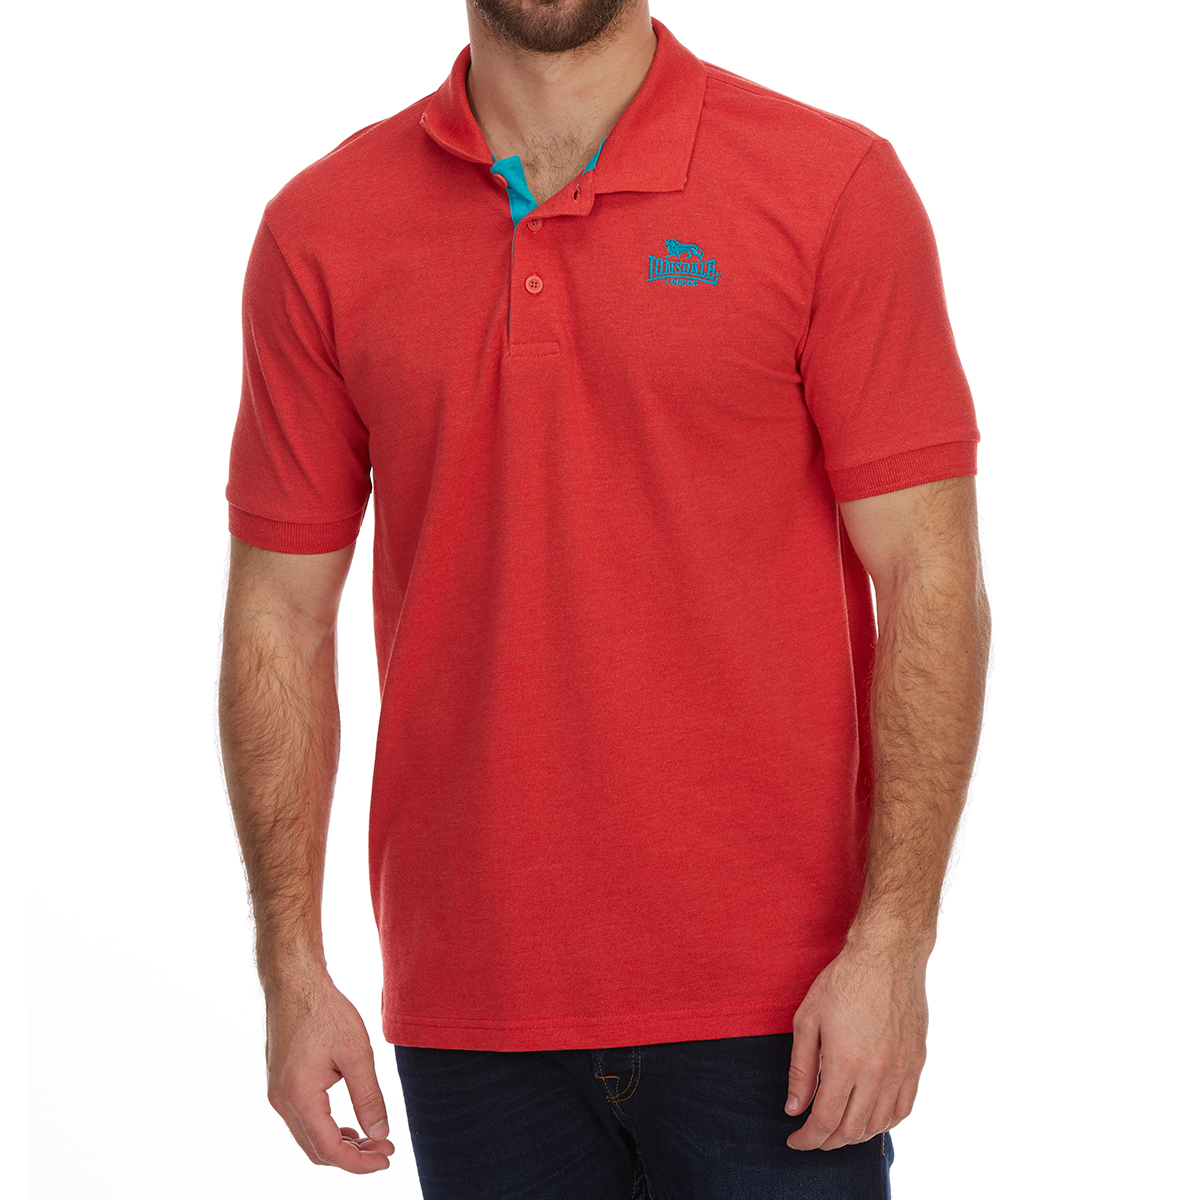 Lonsdale Men's Short-Sleeve Plain Polo Shirt - Red, 4XL